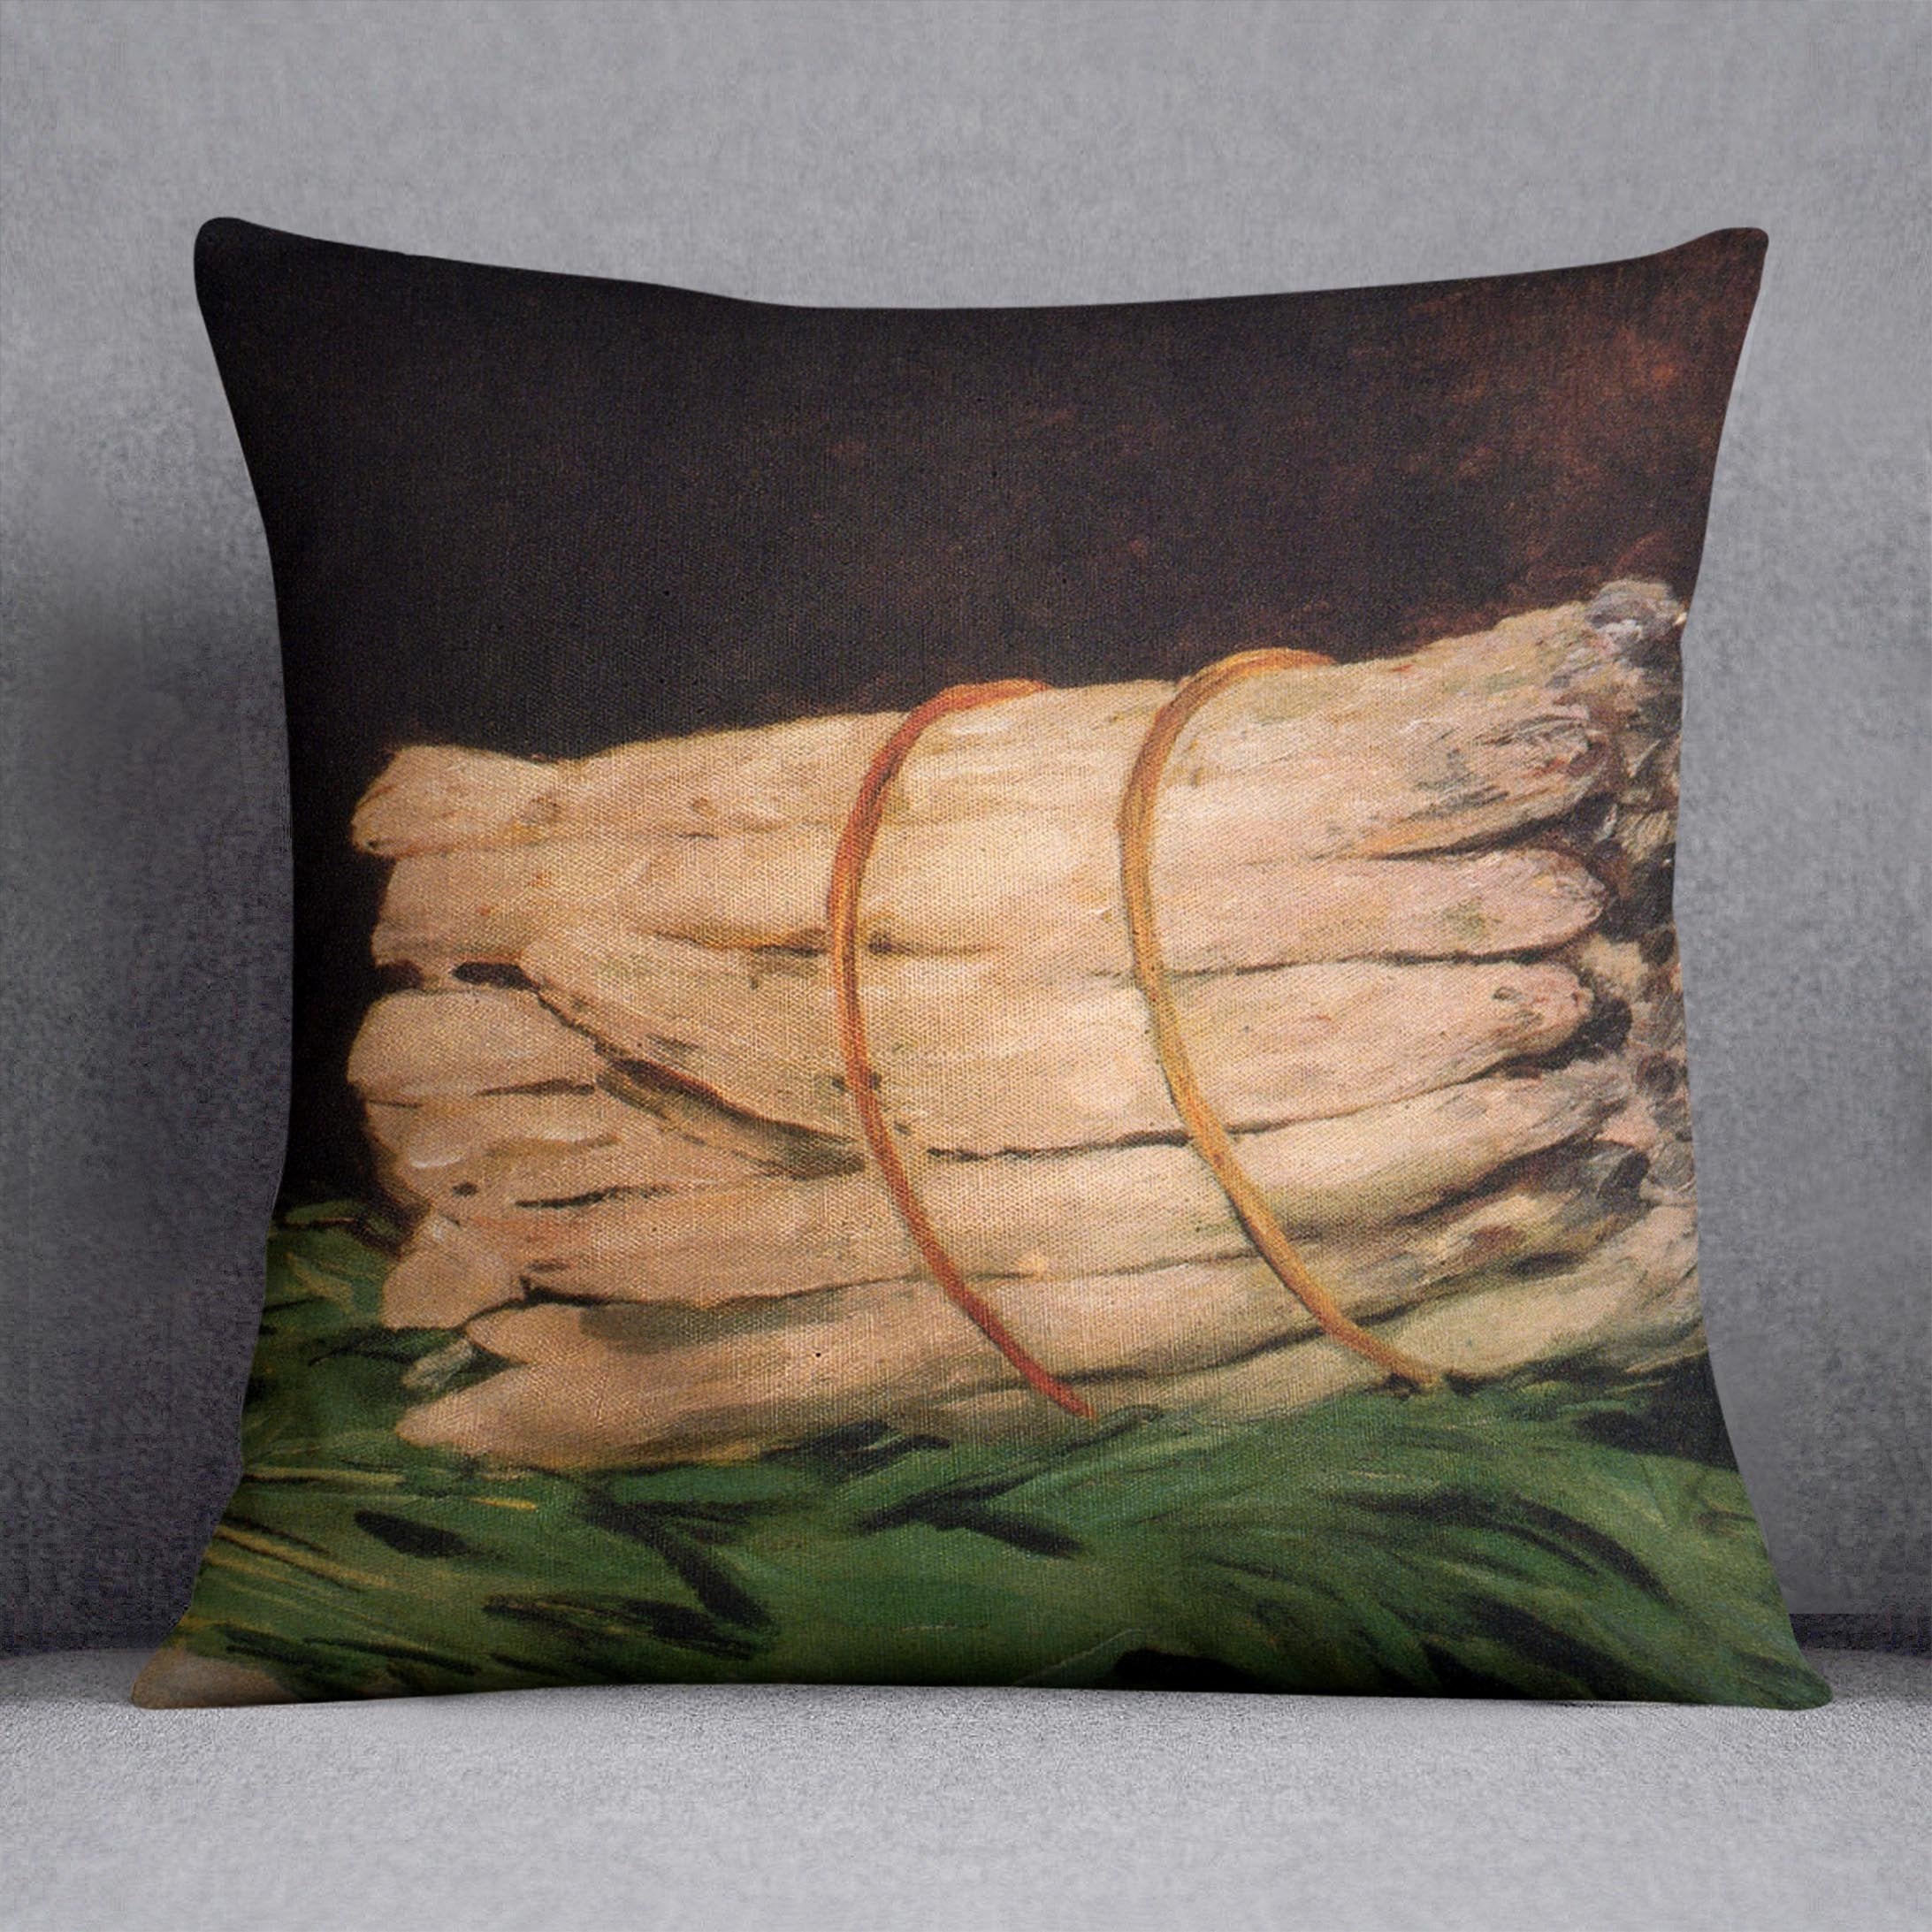 Asperagus by Manet Throw Pillow